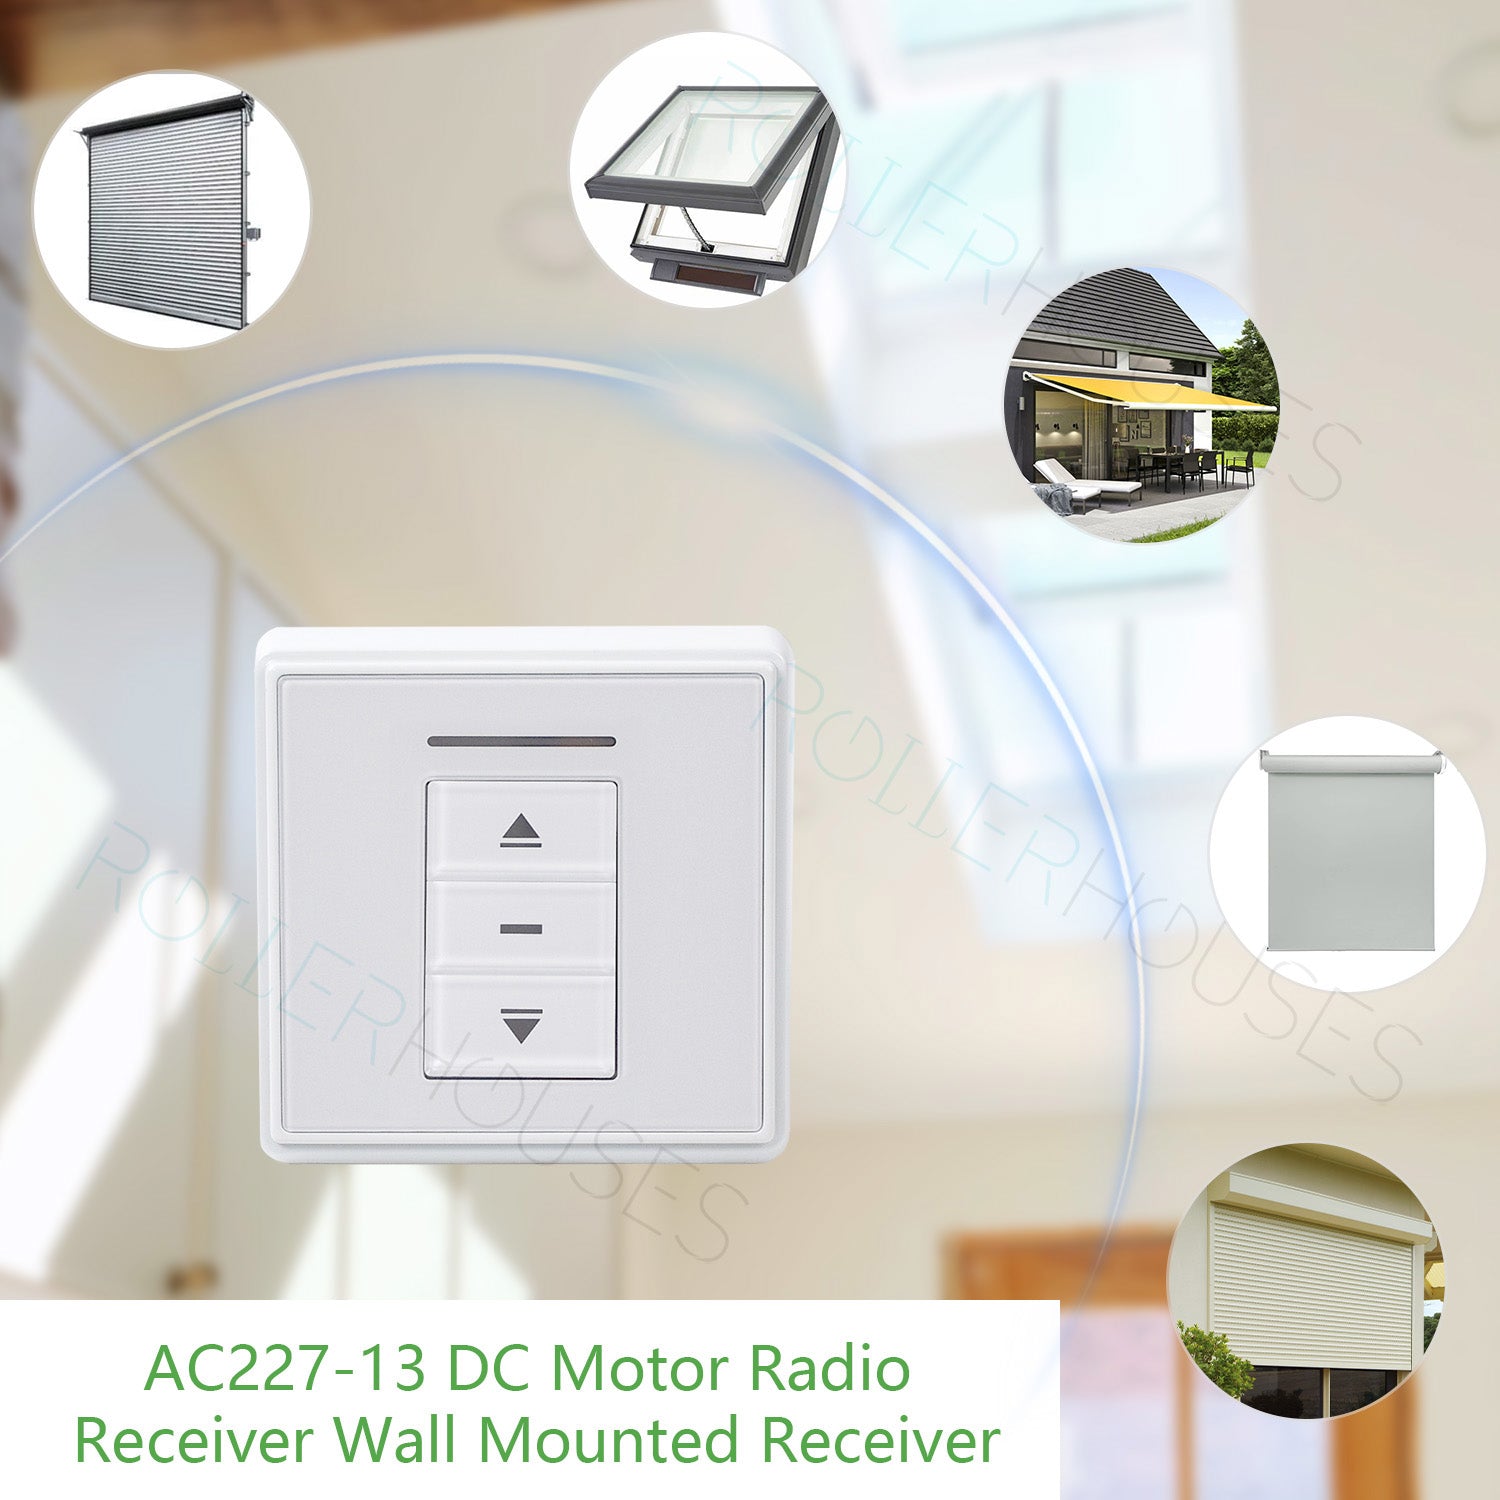 24V Motor Controller: AC227 DC Motor Radio Receiver Wall Mounted Receiver Output 24V DC/4.5A for Tubular Motor.